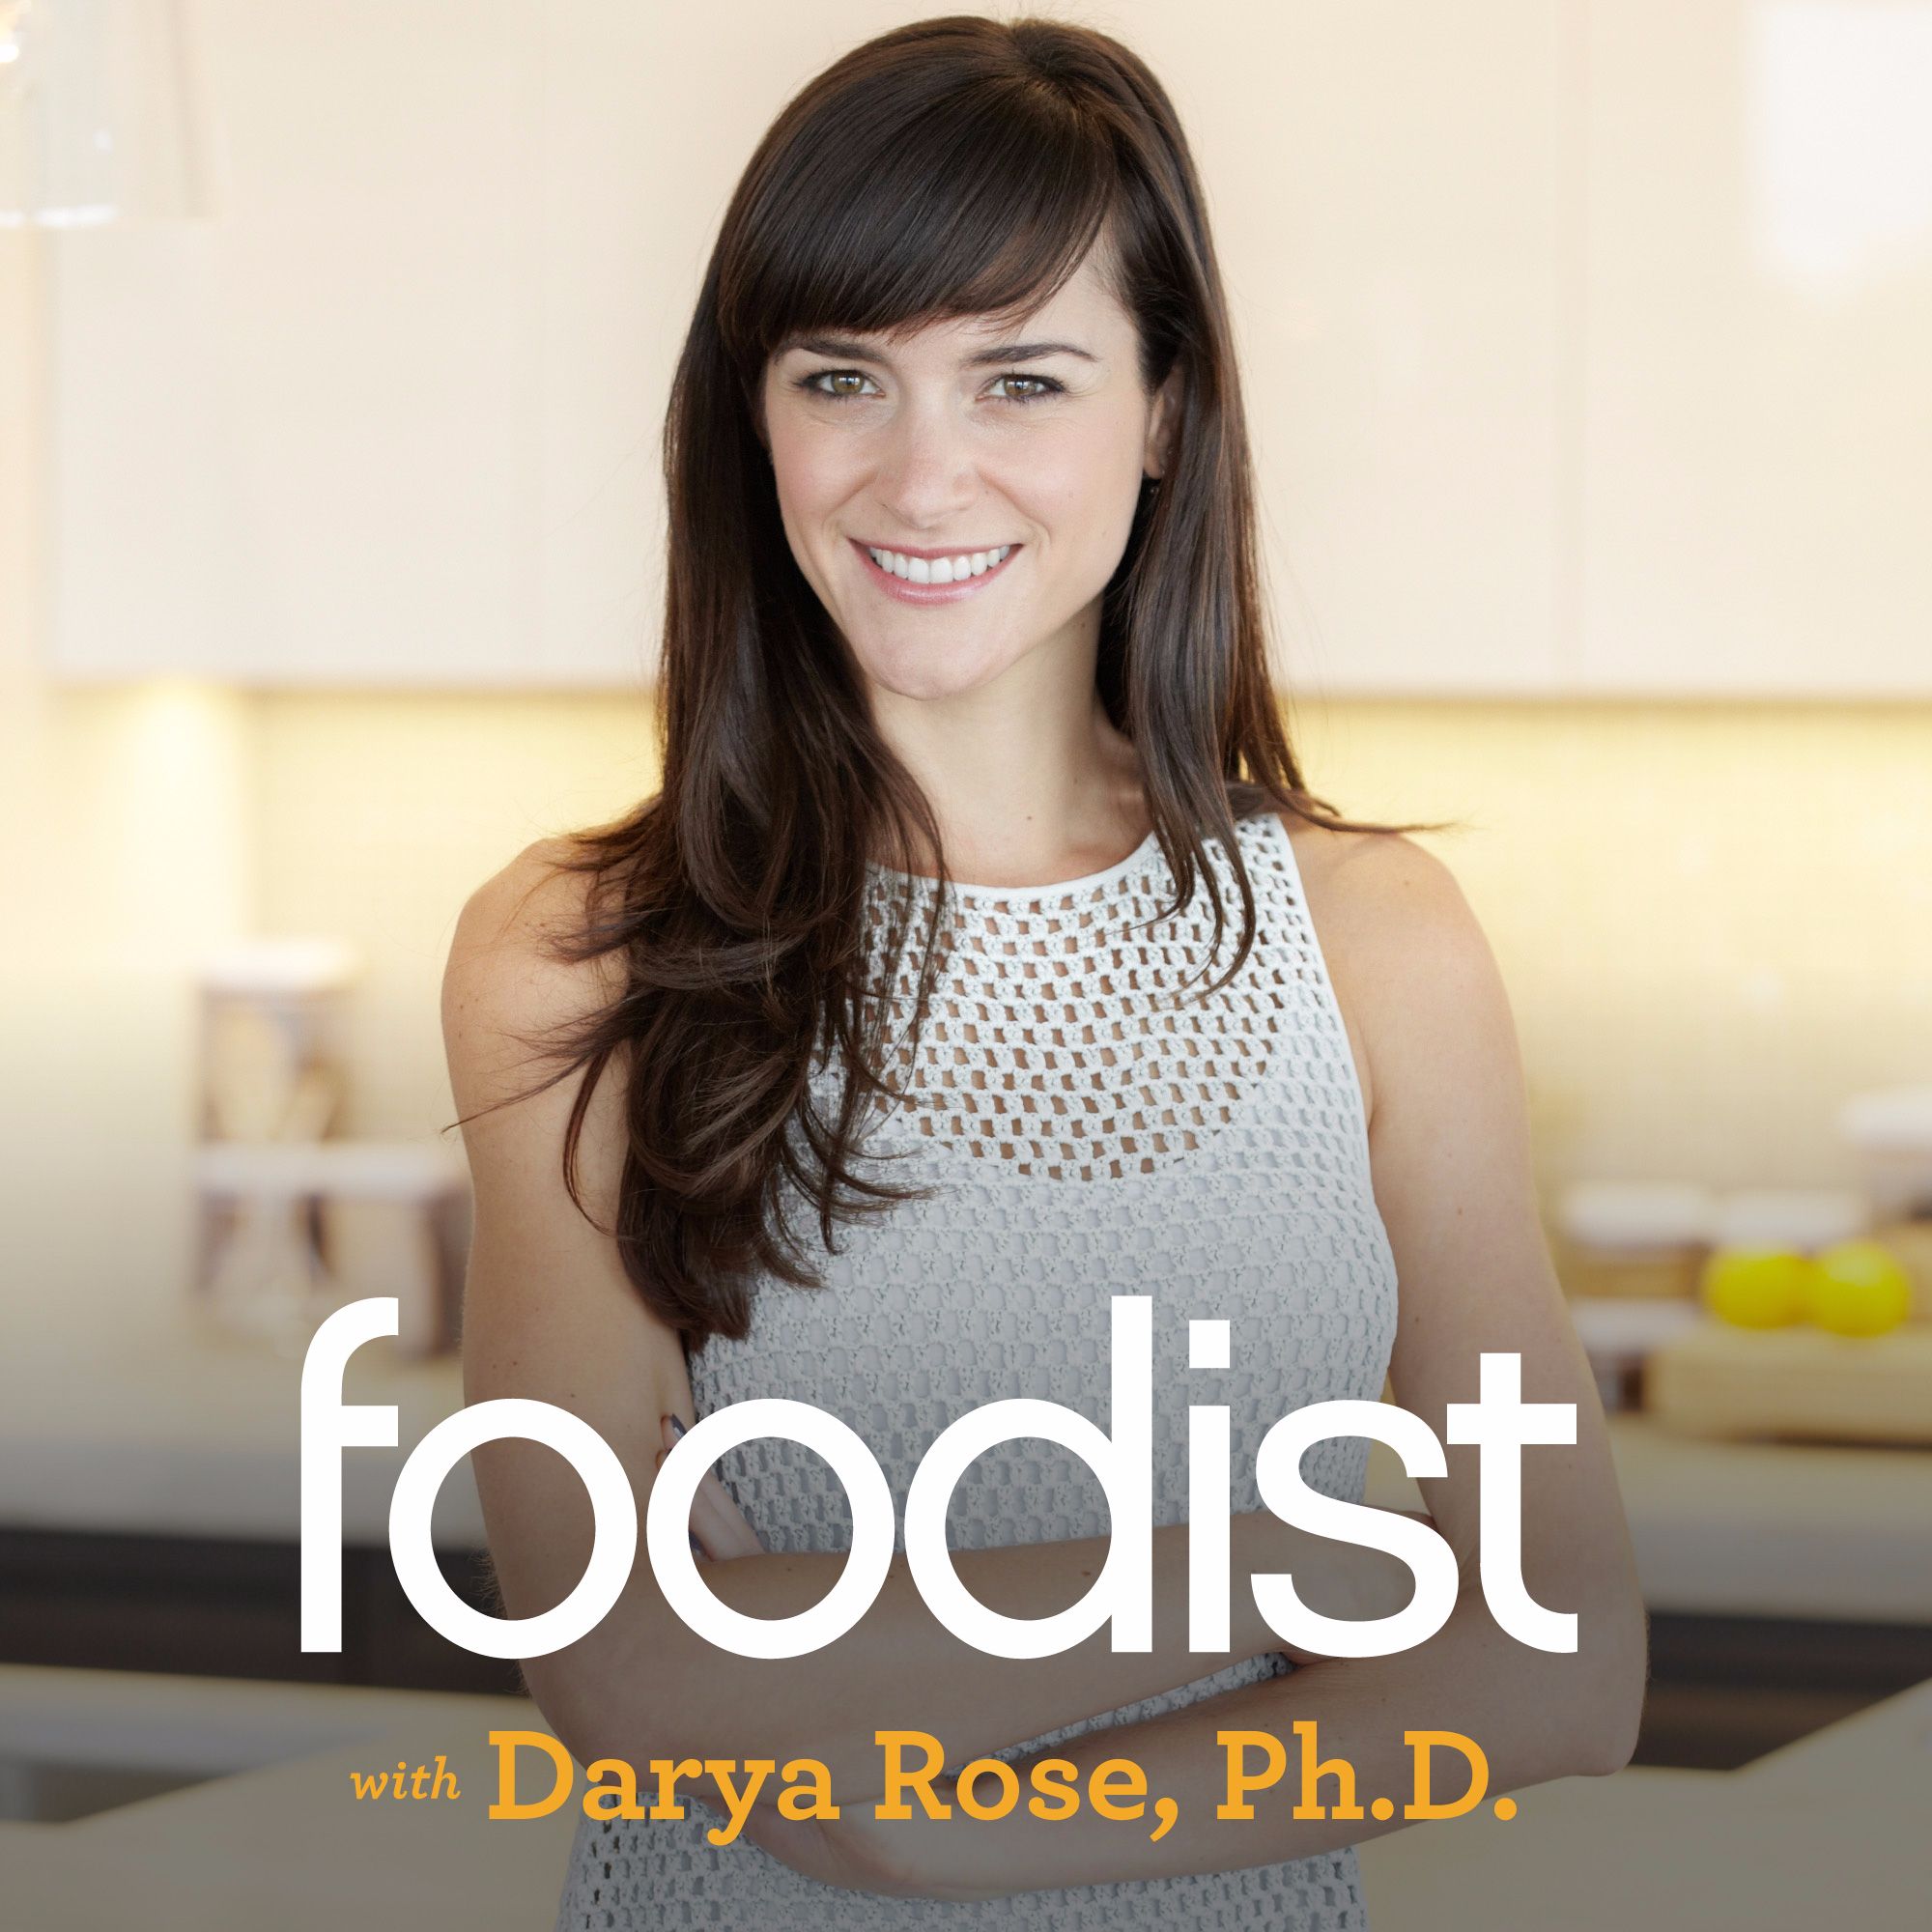 Foodist with Darya Rose, Ph.D